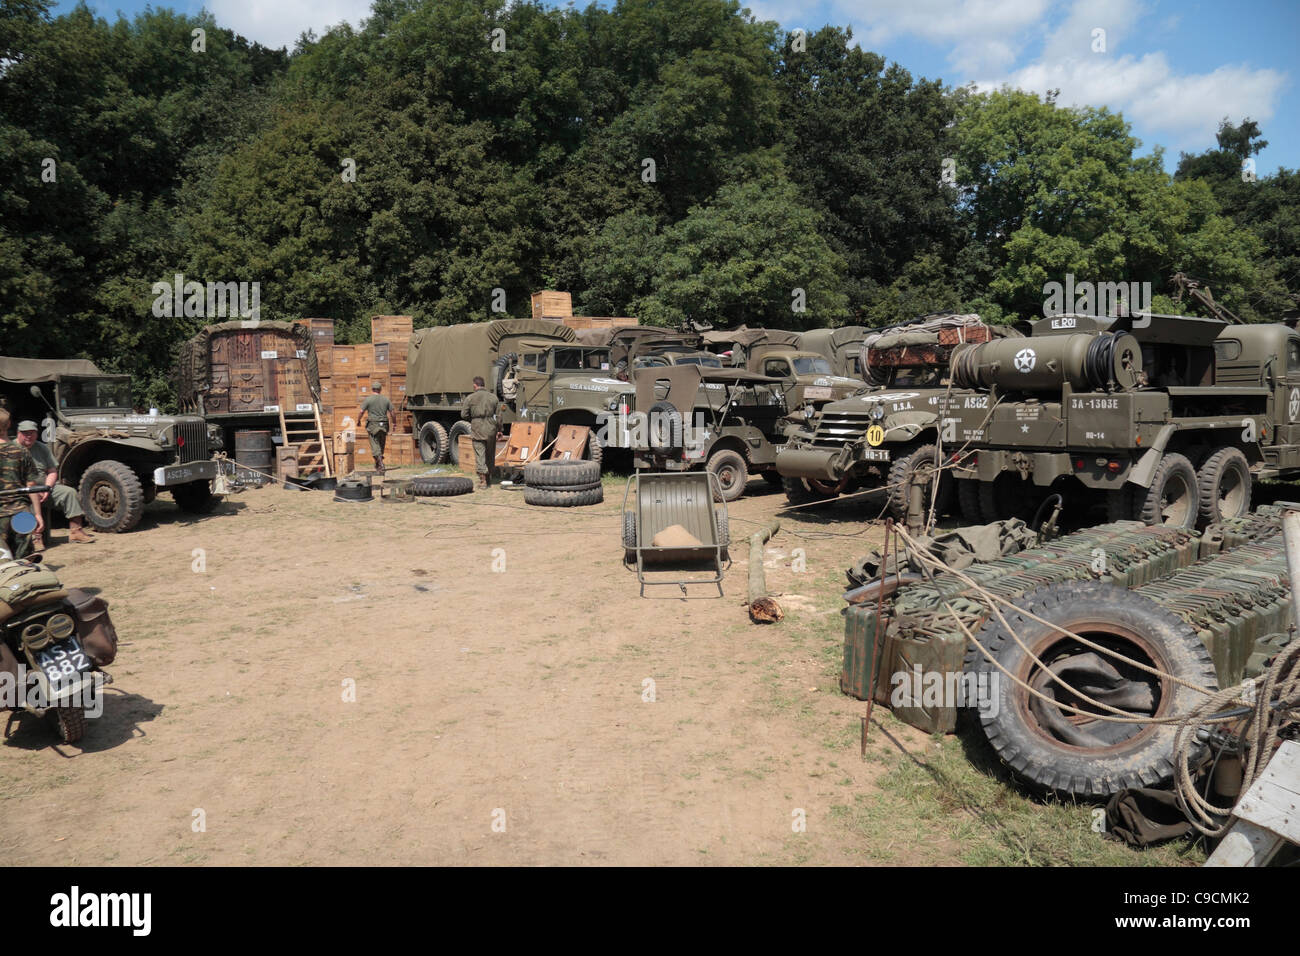 A collection of Vietnam War era US Army vehicles 0n display at the 2011 War & Peace Show at Hop Farm, Paddock Wood, Kent, UK. Stock Photo